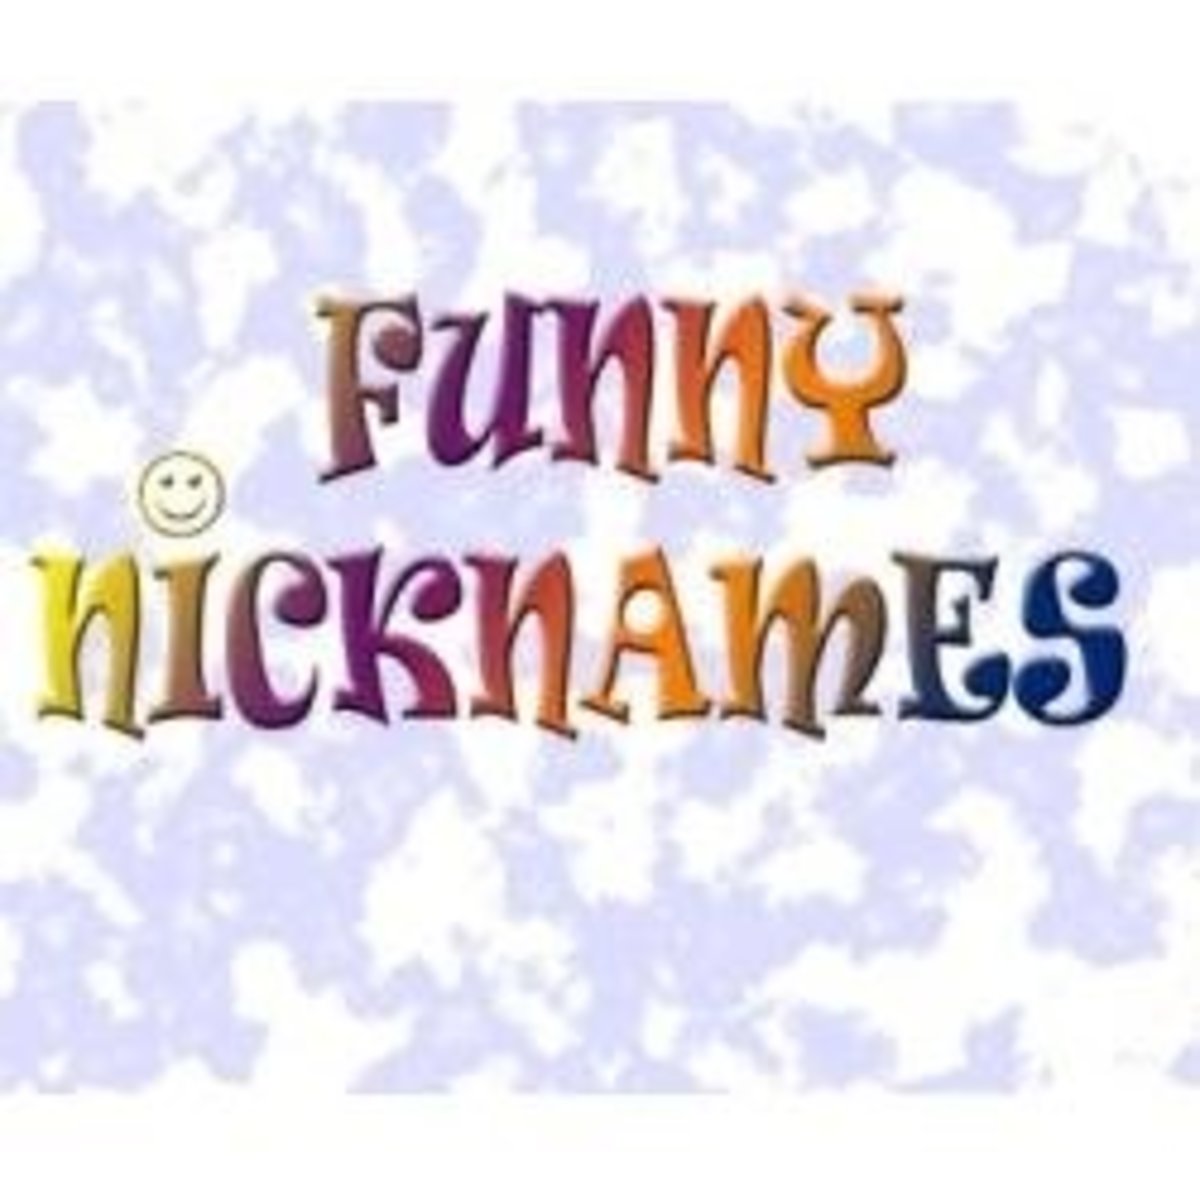 list-of-funny-nicknames